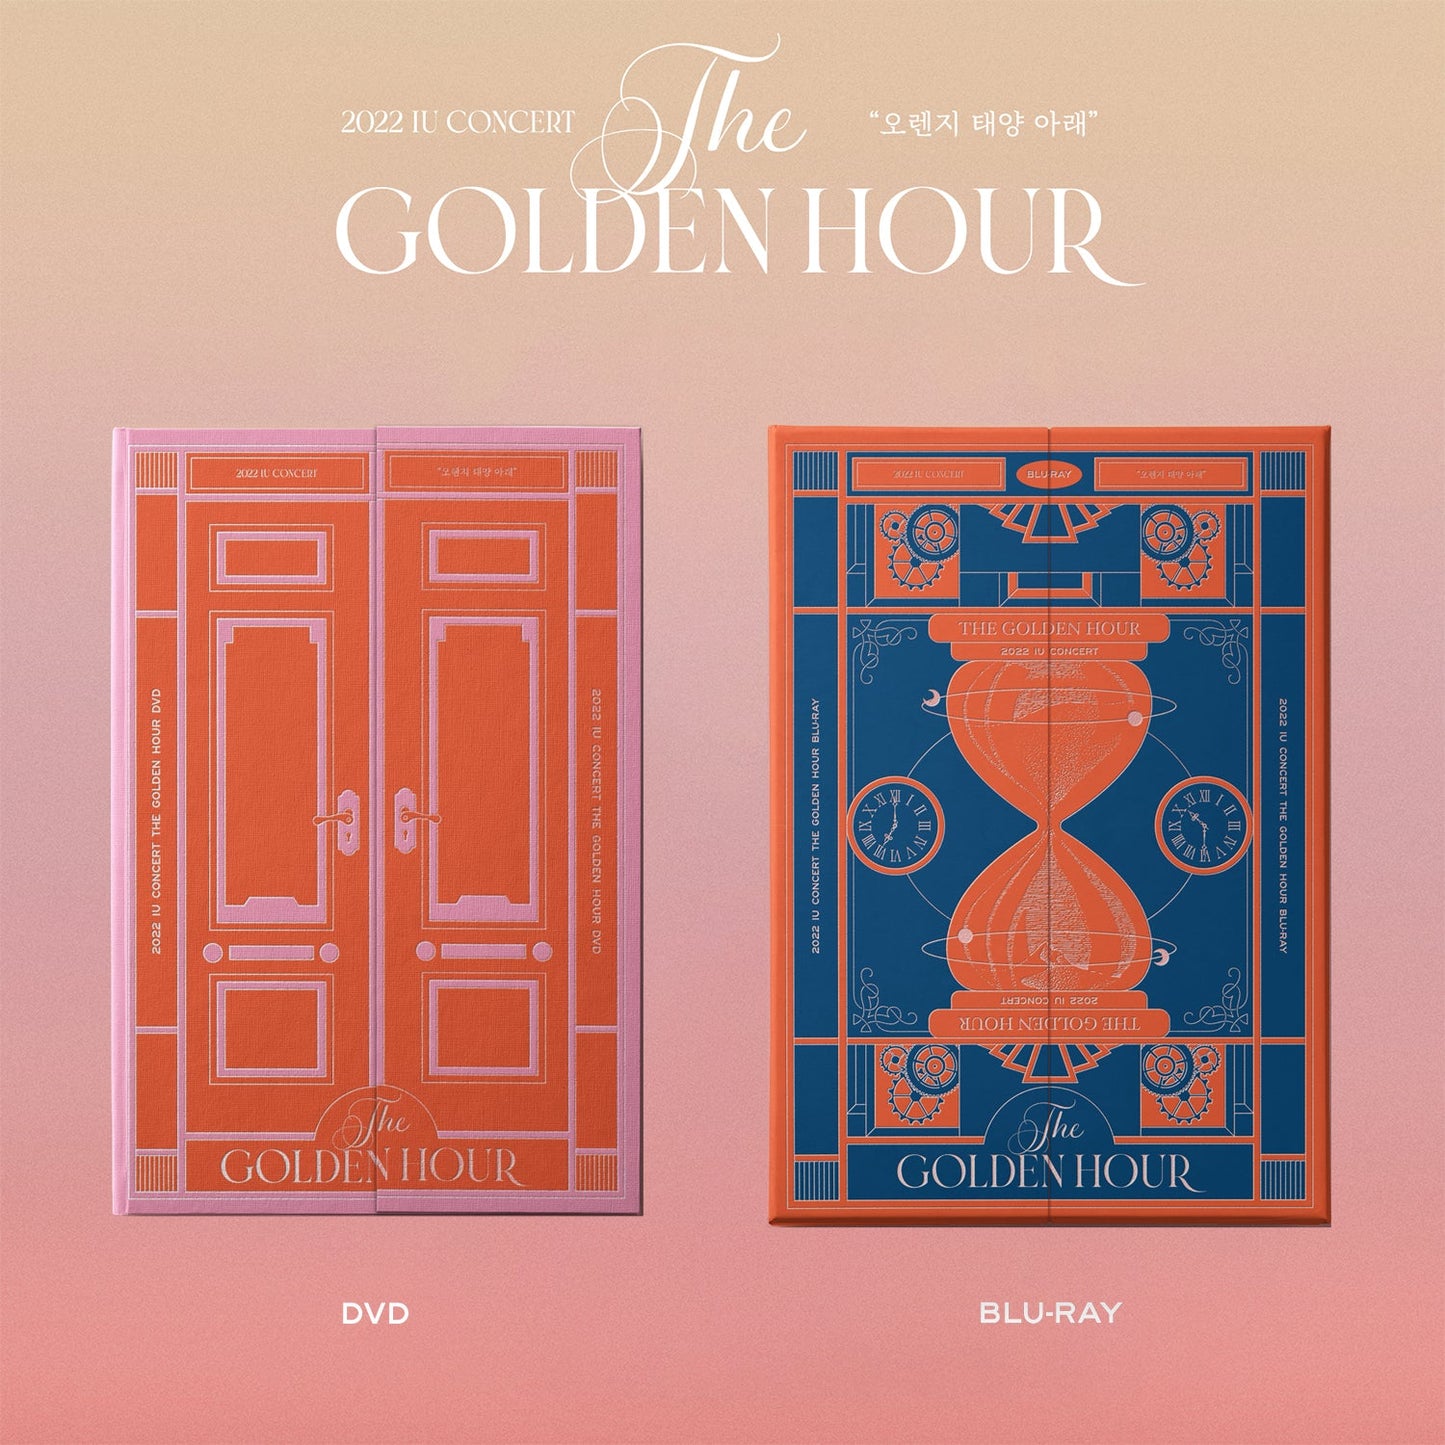 IU 2022 CONCERT 'THE GOLDEN HOUR' SET COVER